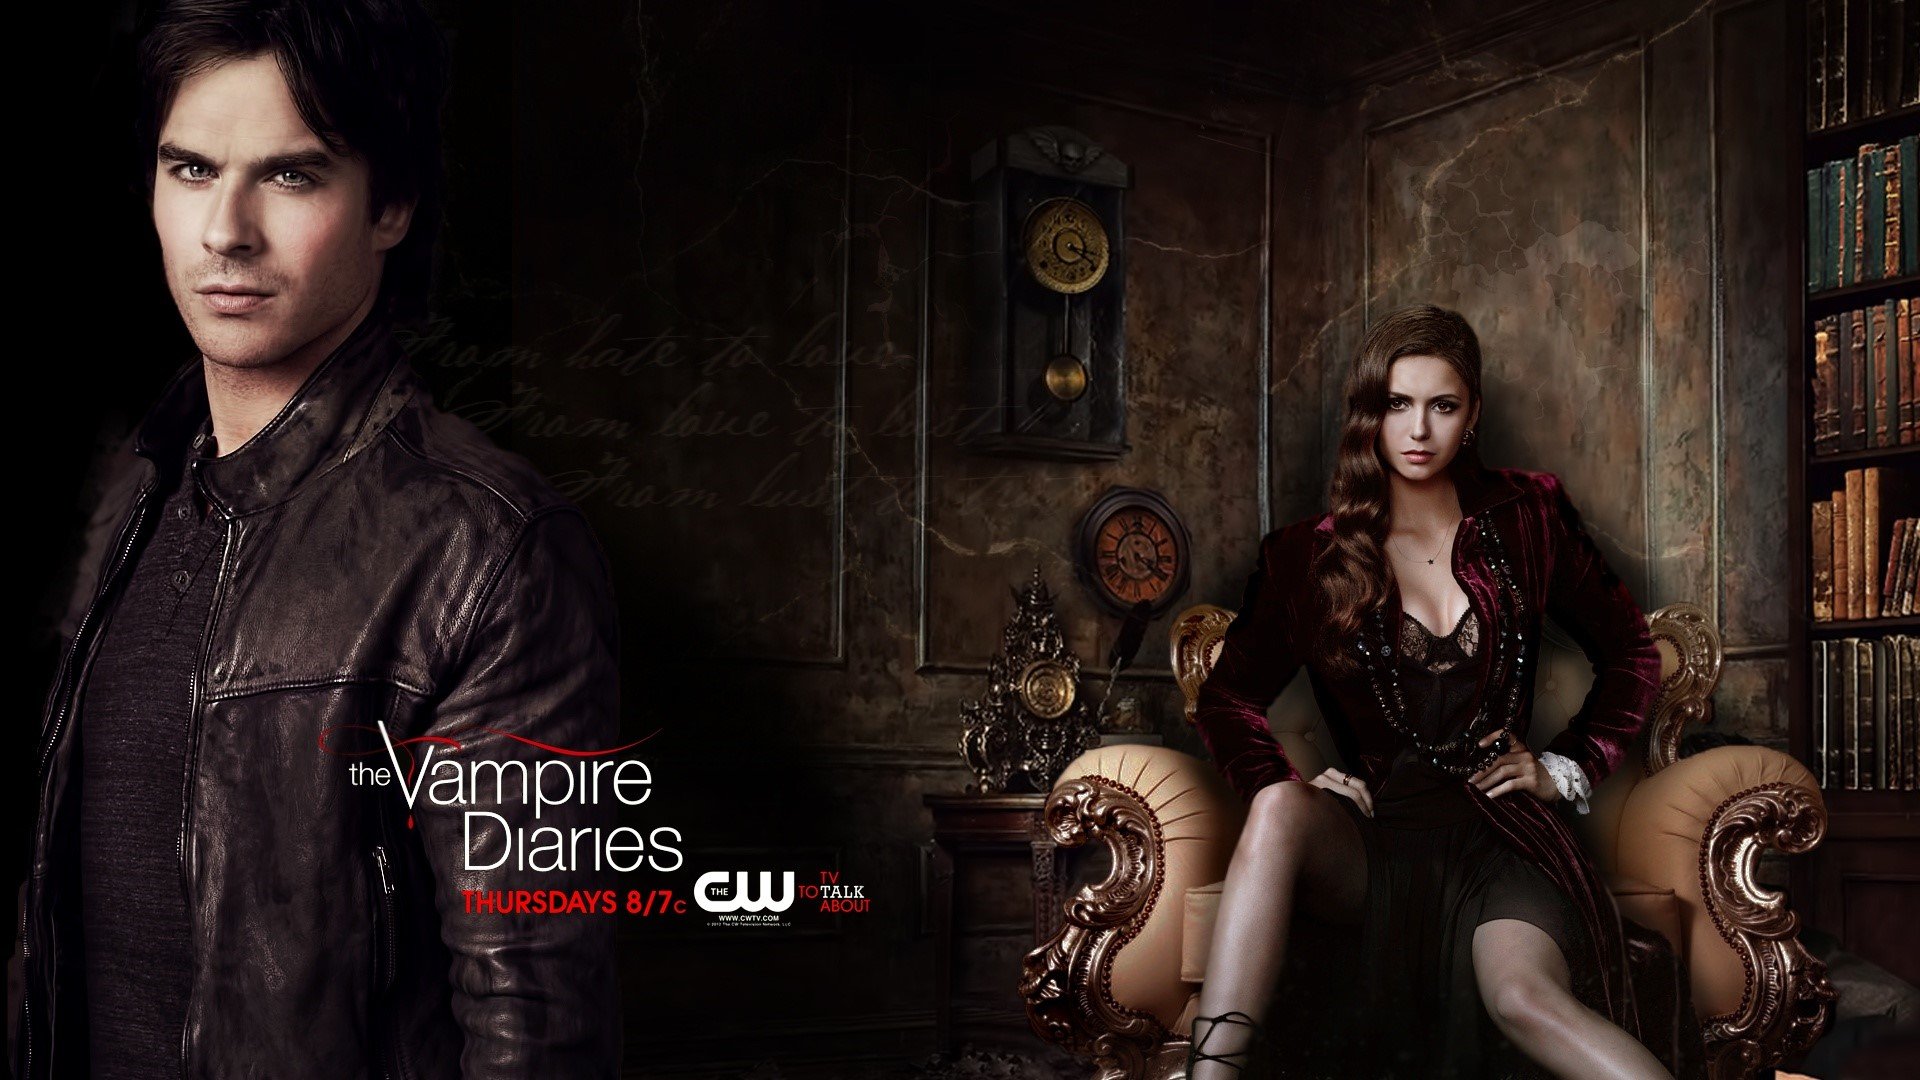 Fondos de pantalla Vampire Diaries season 4